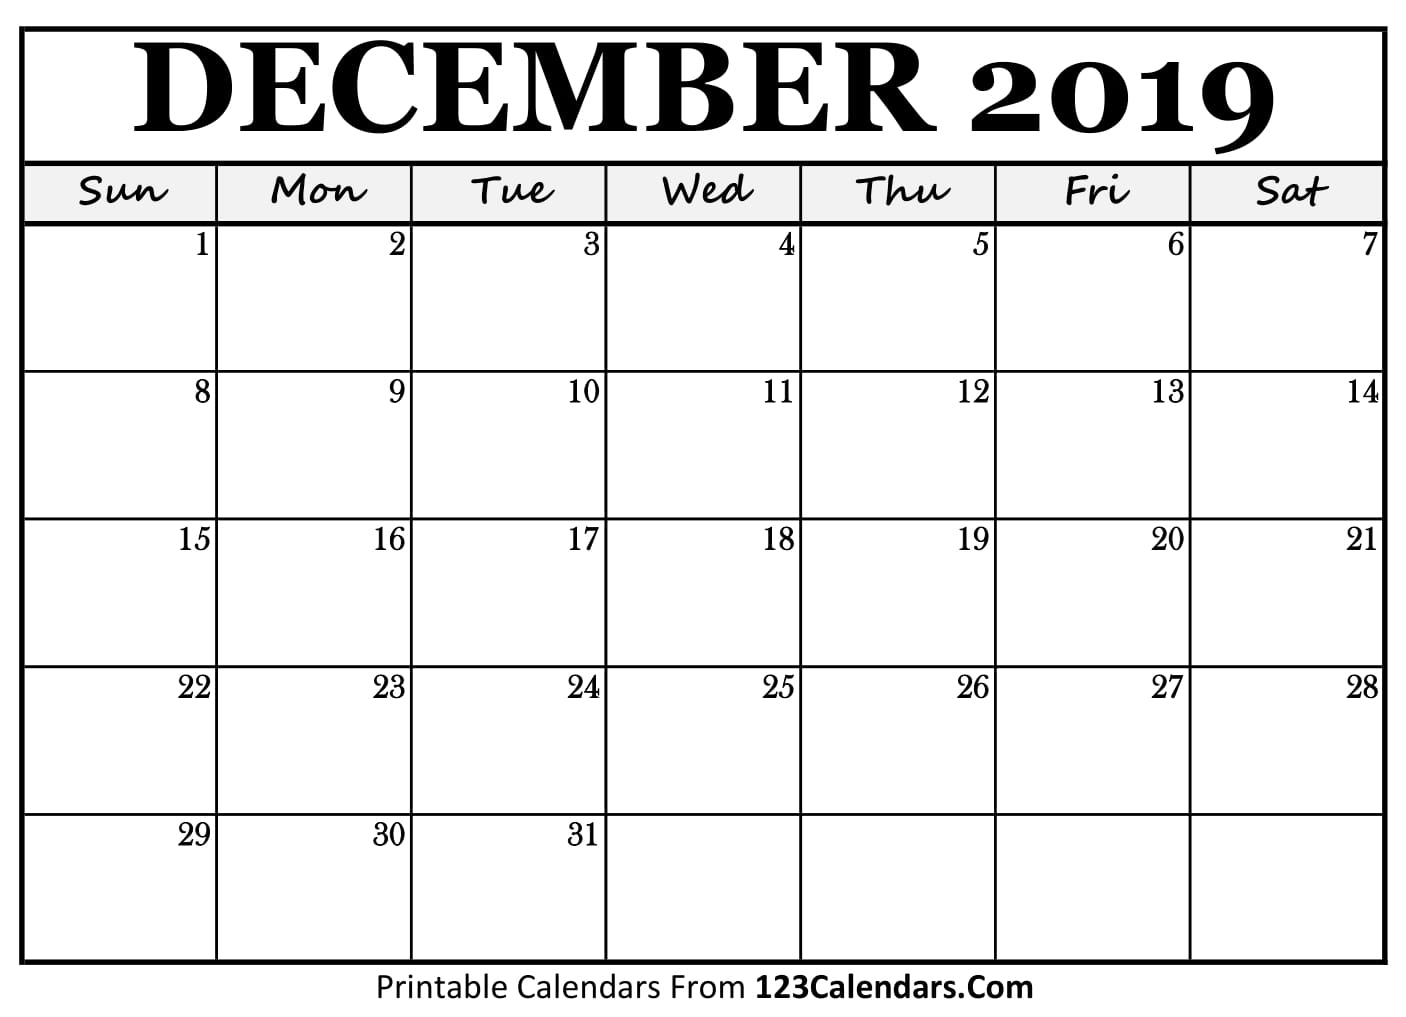 december-2019-printable-calendar-123calendars